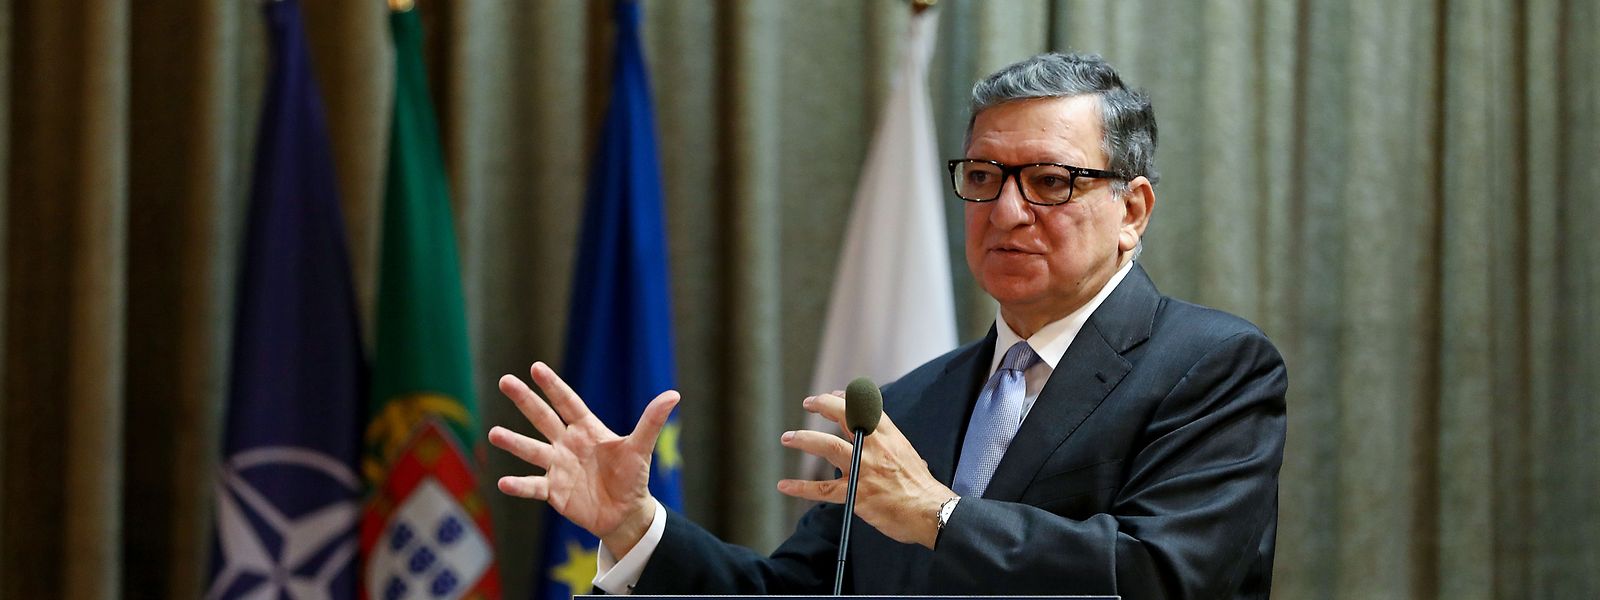 Covid 19 Durao Barroso Preside A Partir De Hoje A Alianca Global Para As Vacinas